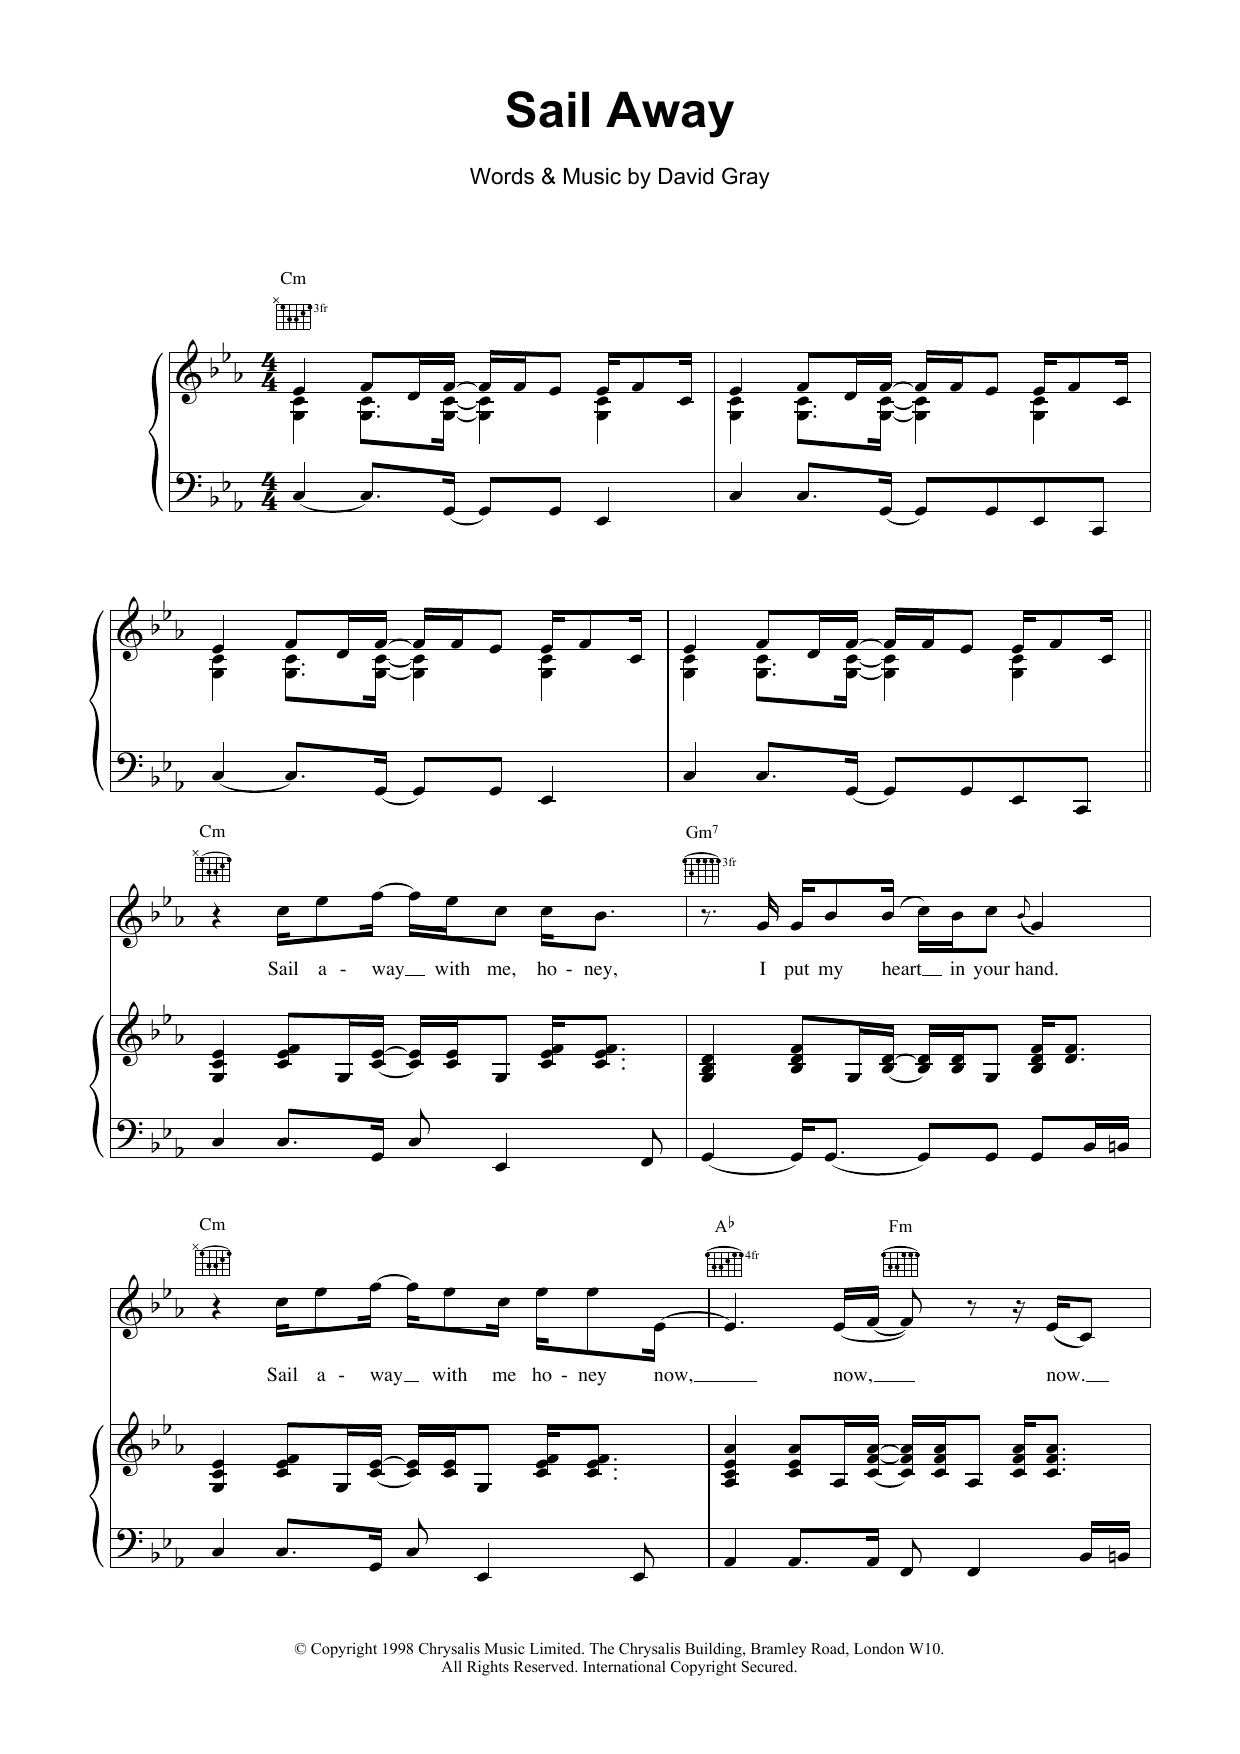 David Gray Sail Away Sheet Music Notes & Chords for Clarinet - Download or Print PDF